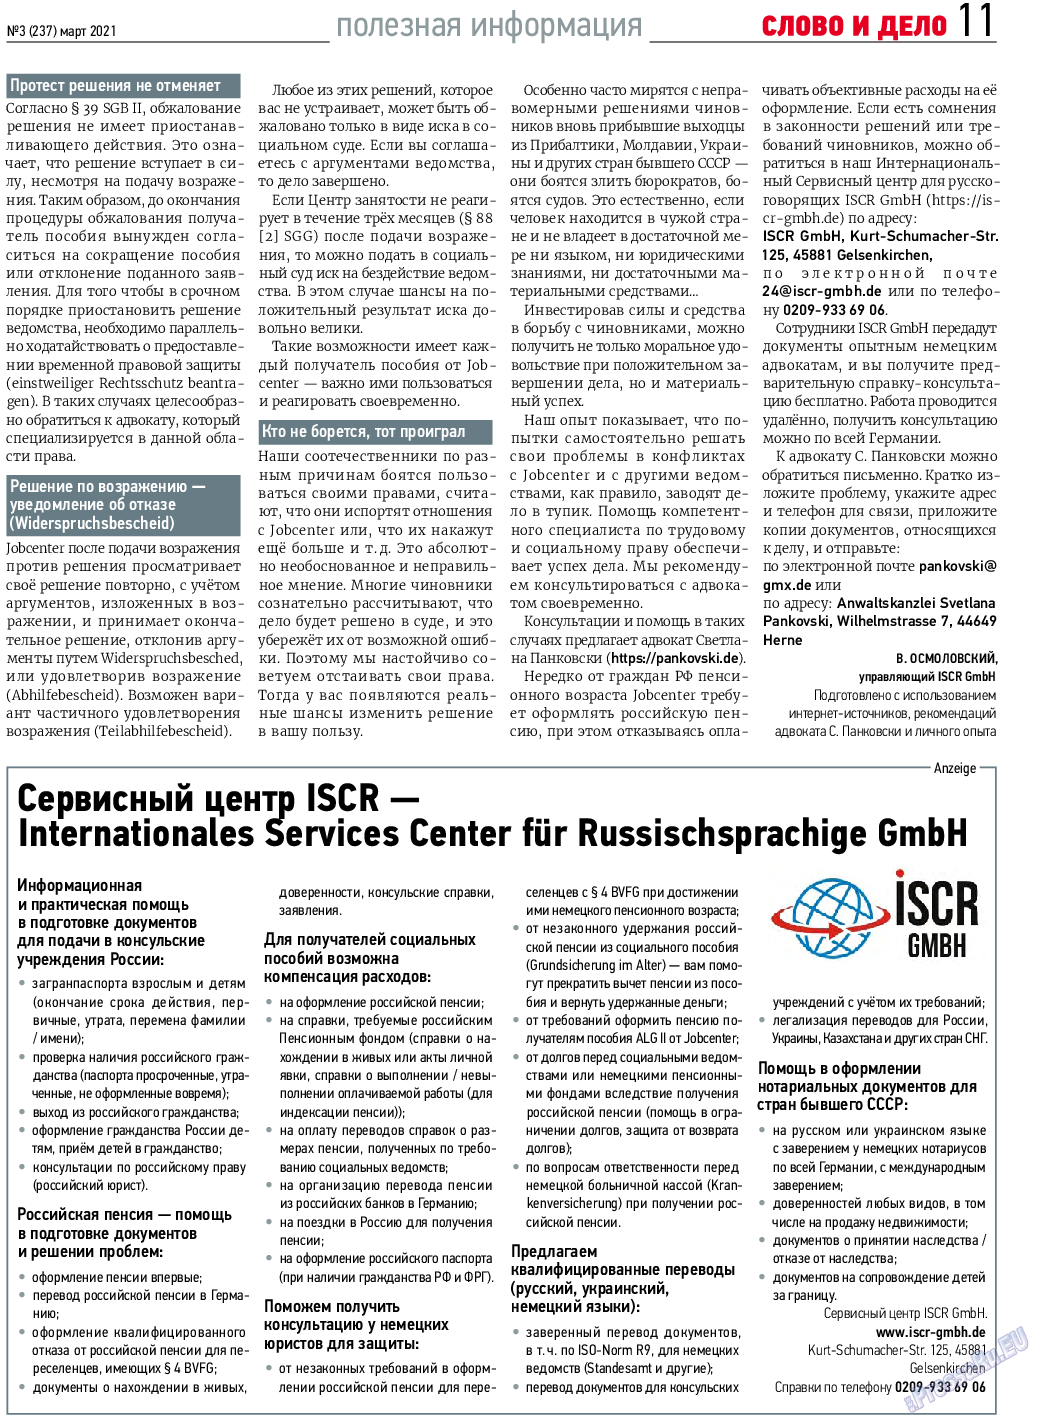 Телеграф NRW, газета. 2021 №3 стр.11